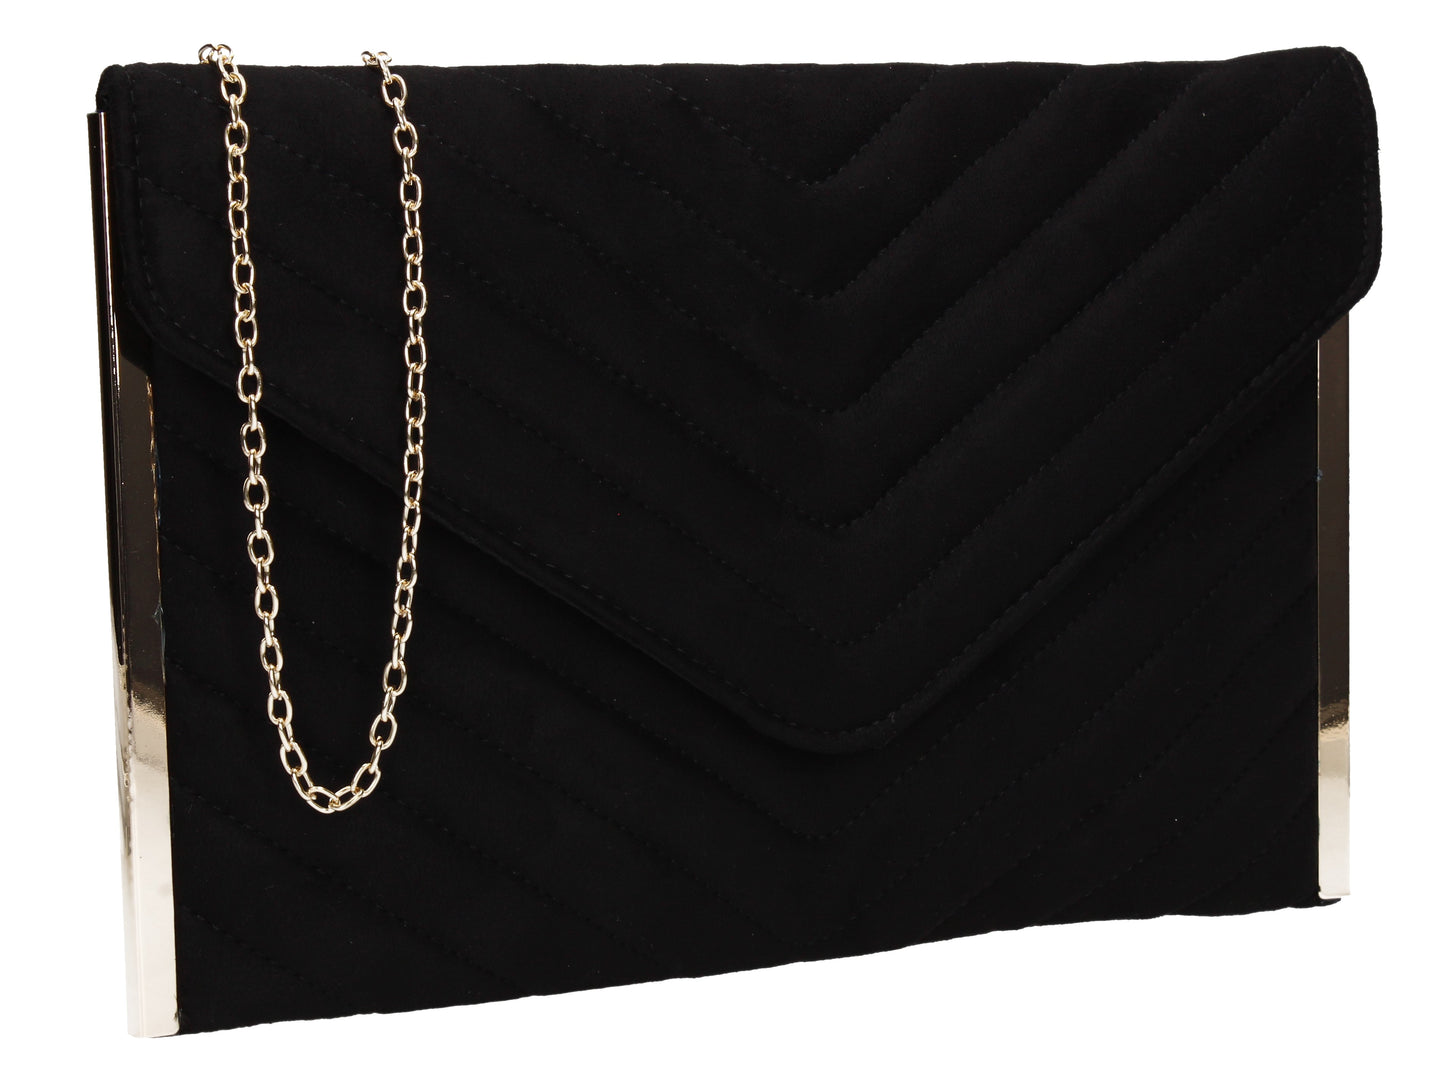 SWANKYSWANS Tessa Clutch Bag Black Cute Cheap Clutch Bag For Weddings School and Work